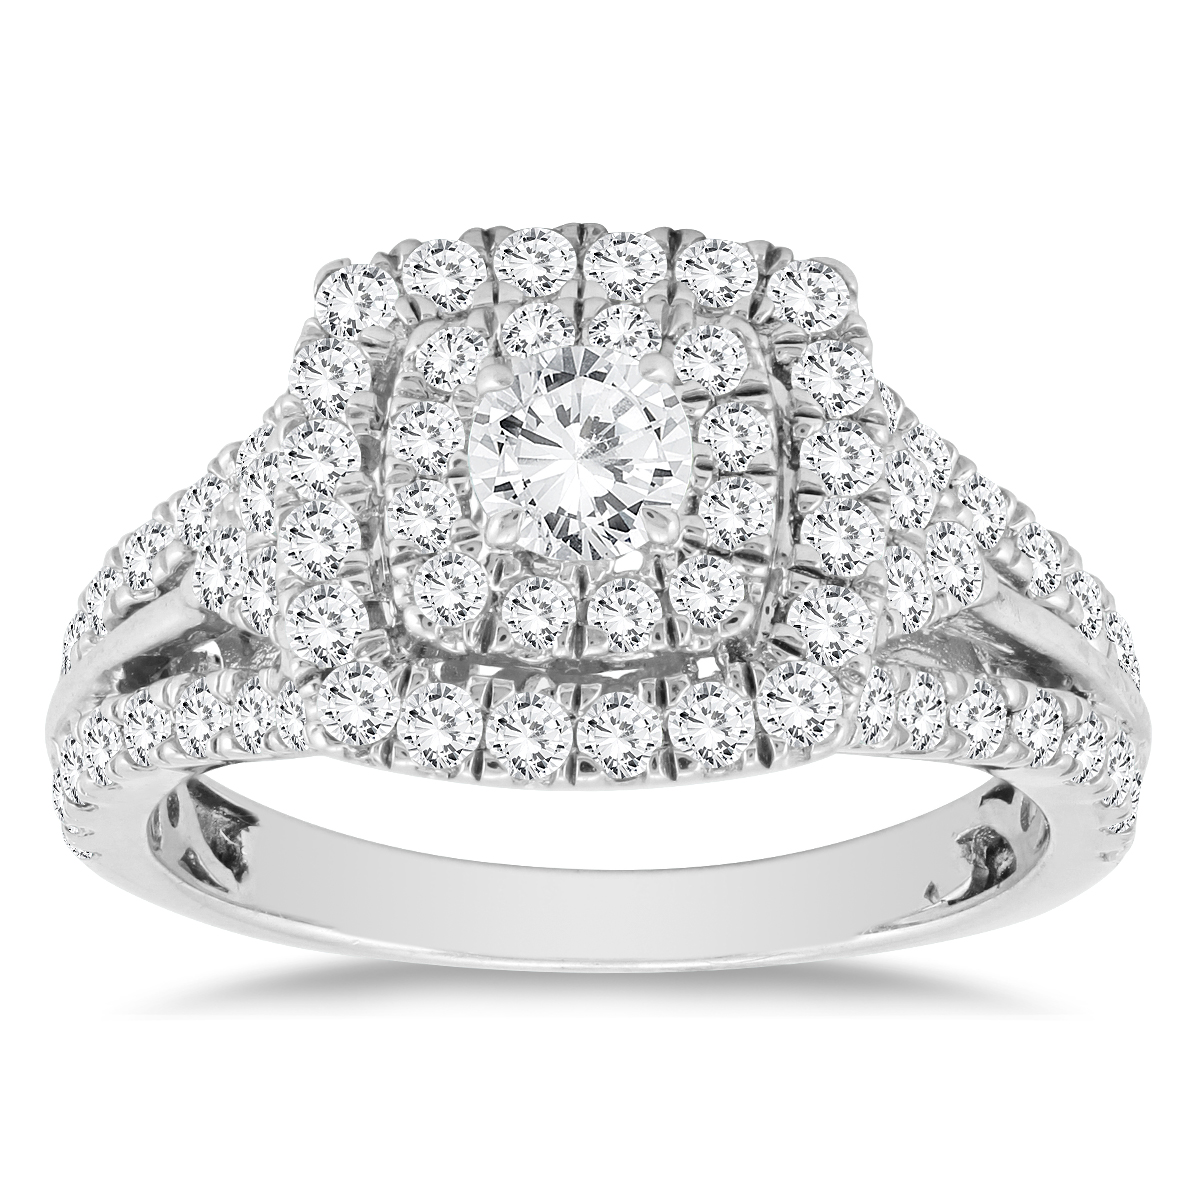 1 1/2 Carat TW Diamond Engagement Ring in 10k White Gold